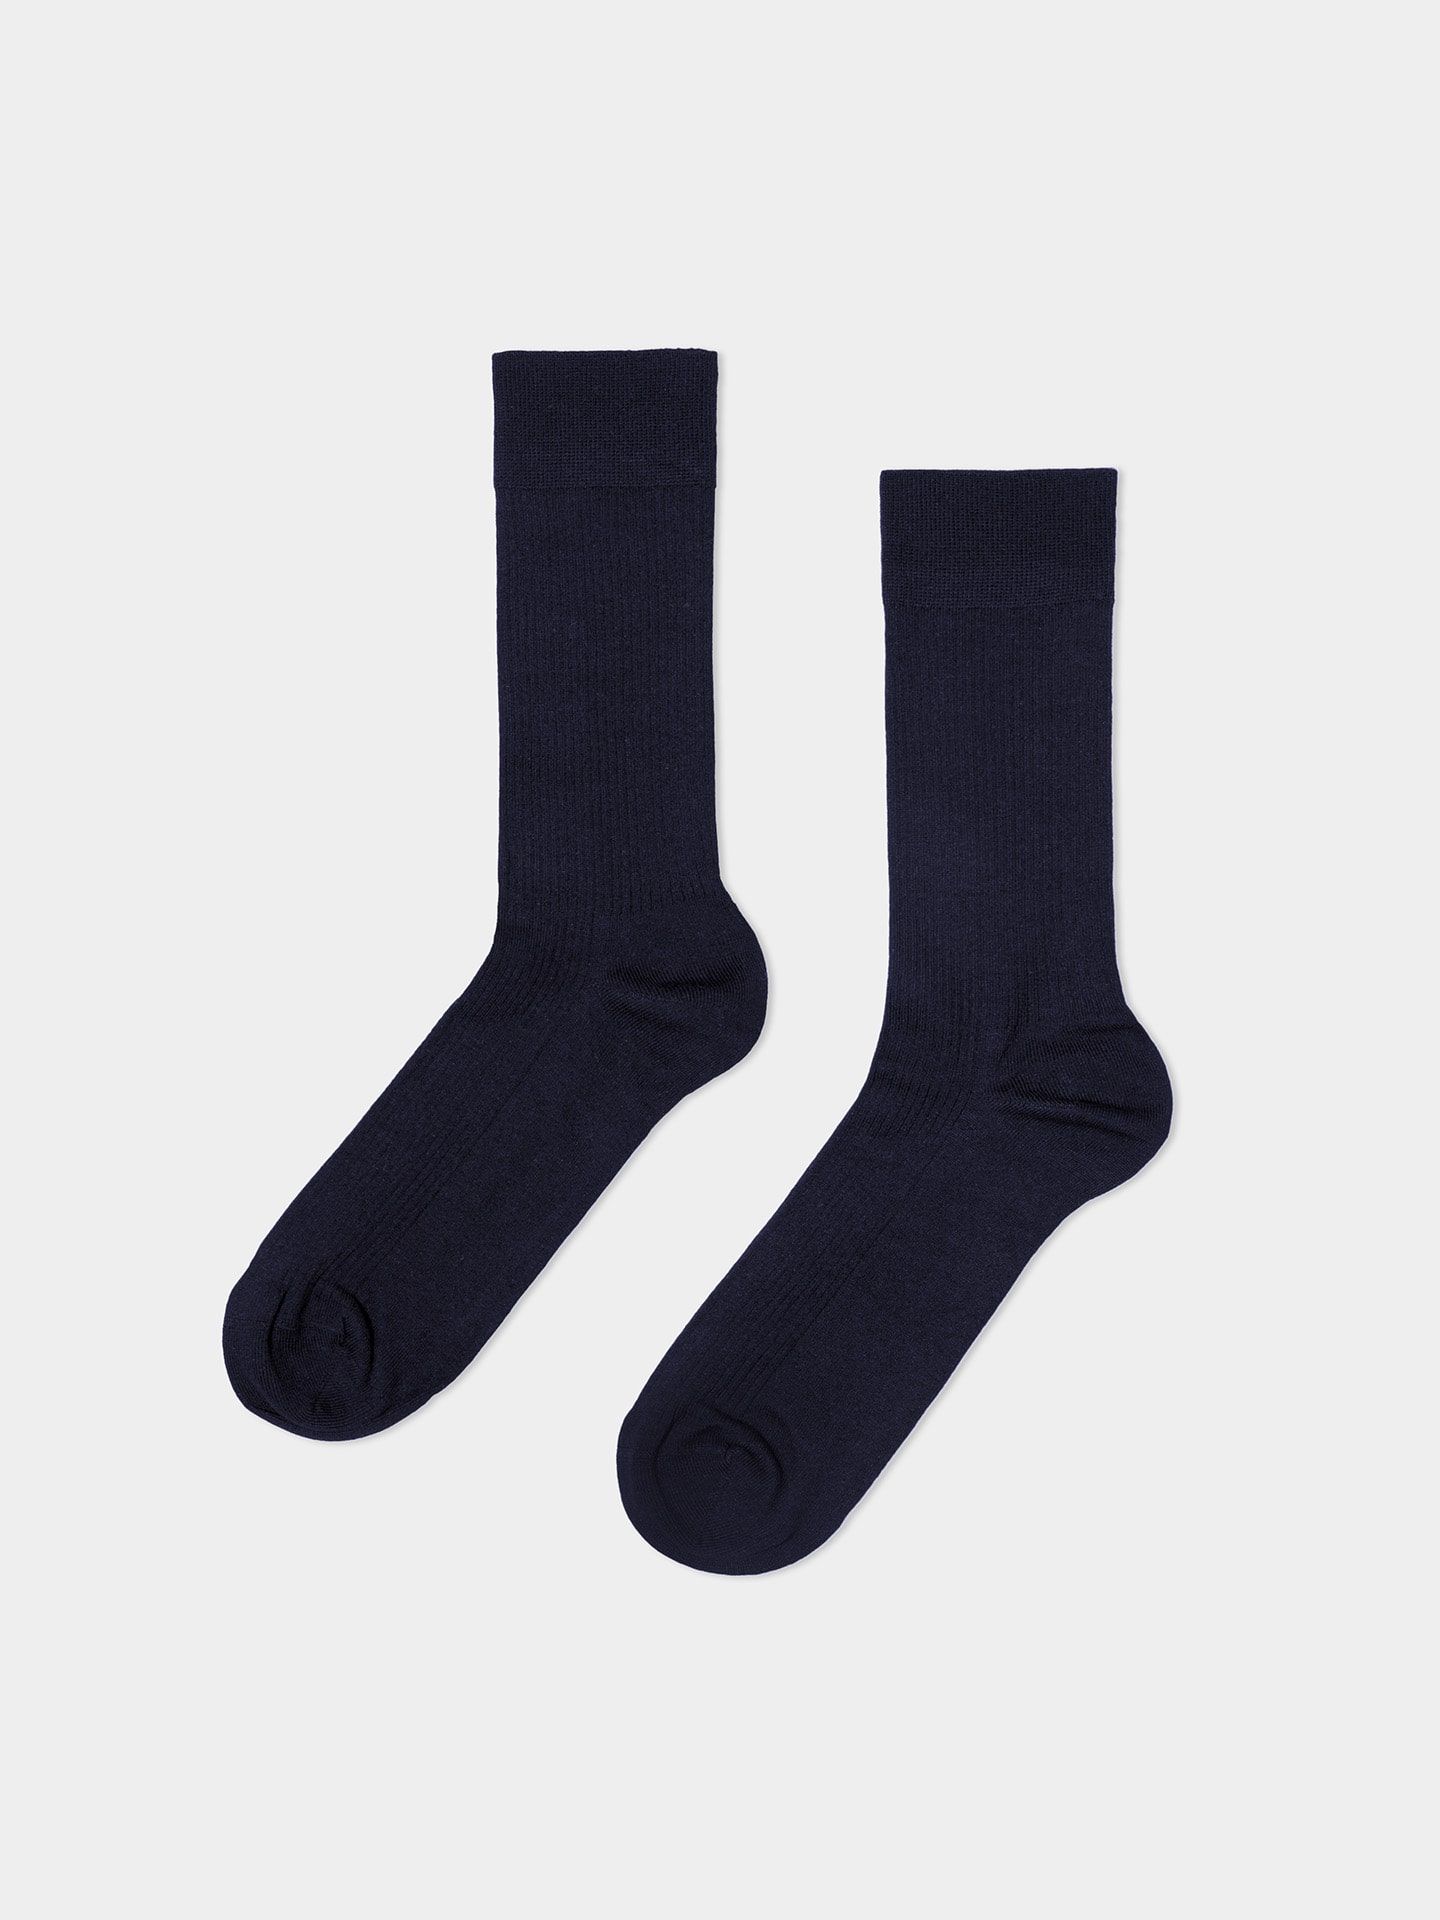 Casual Cotton Gerippte Socken im 3er Pack dunkelblau 39-42